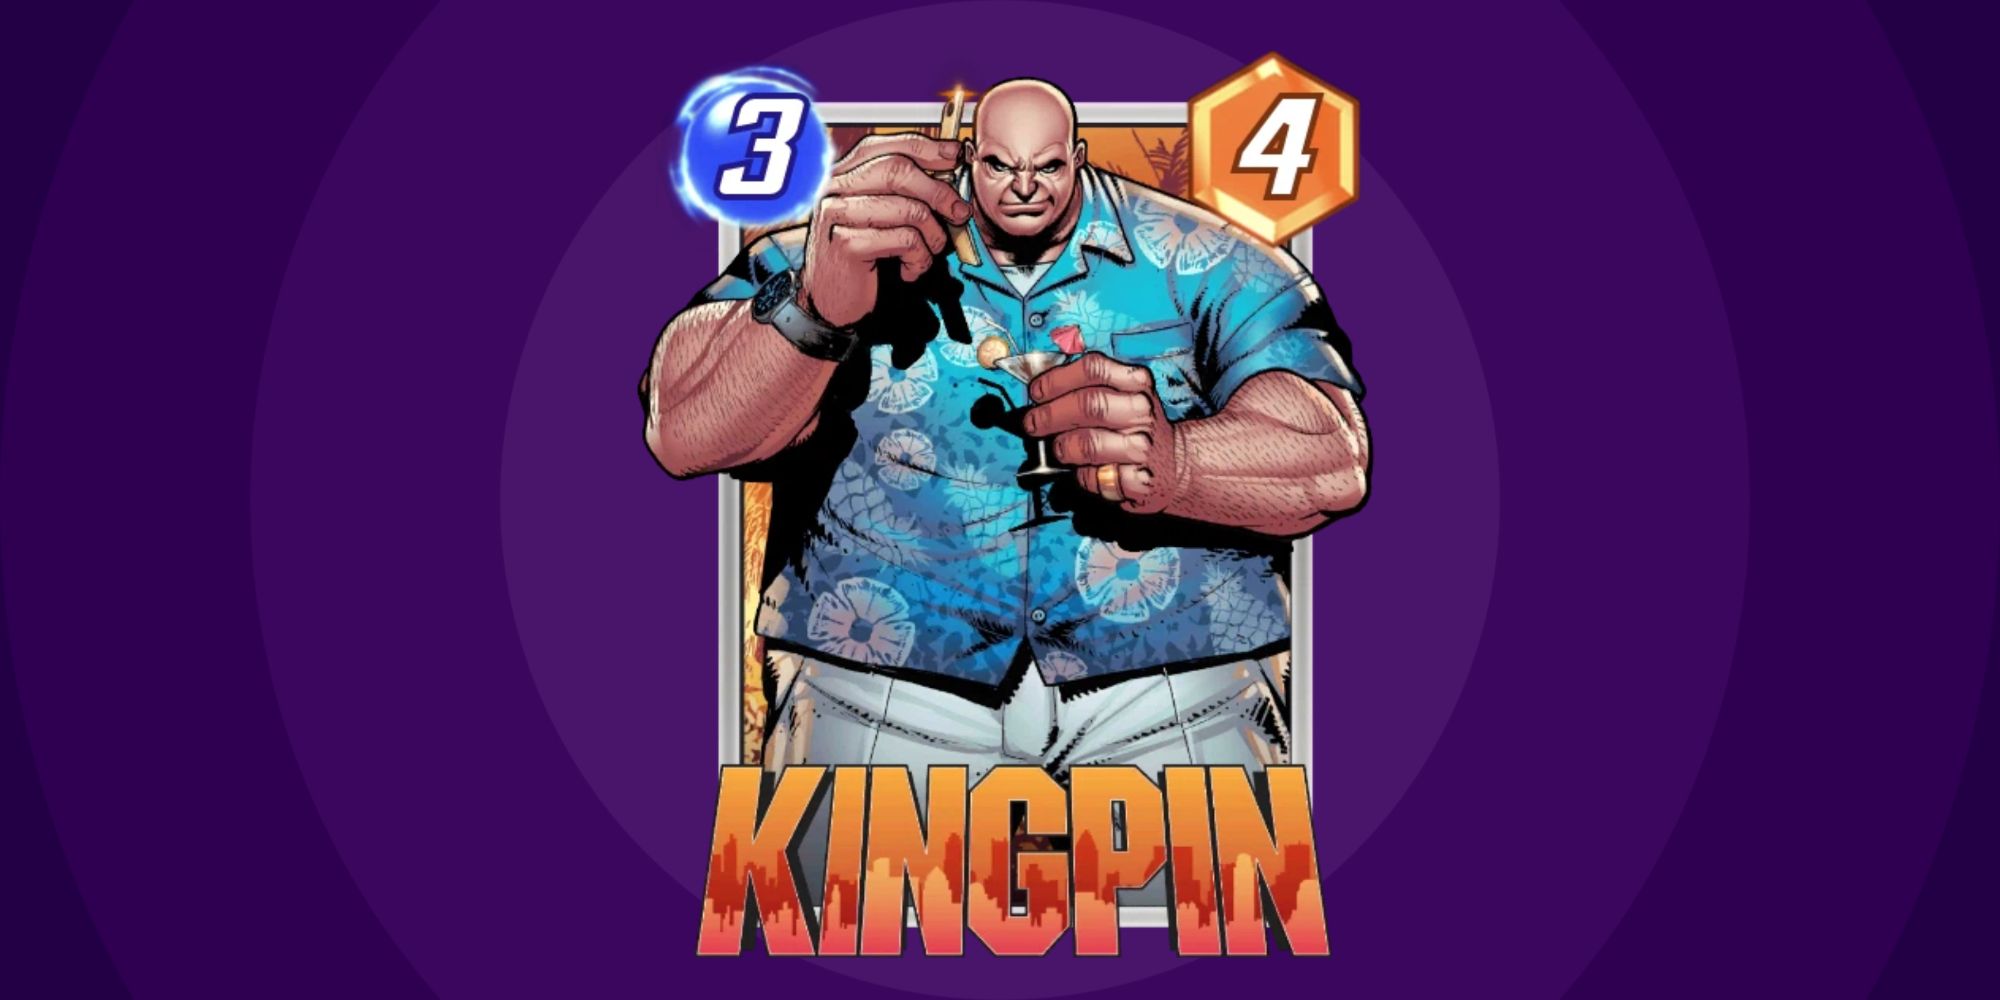 kingpin card in marvel snap